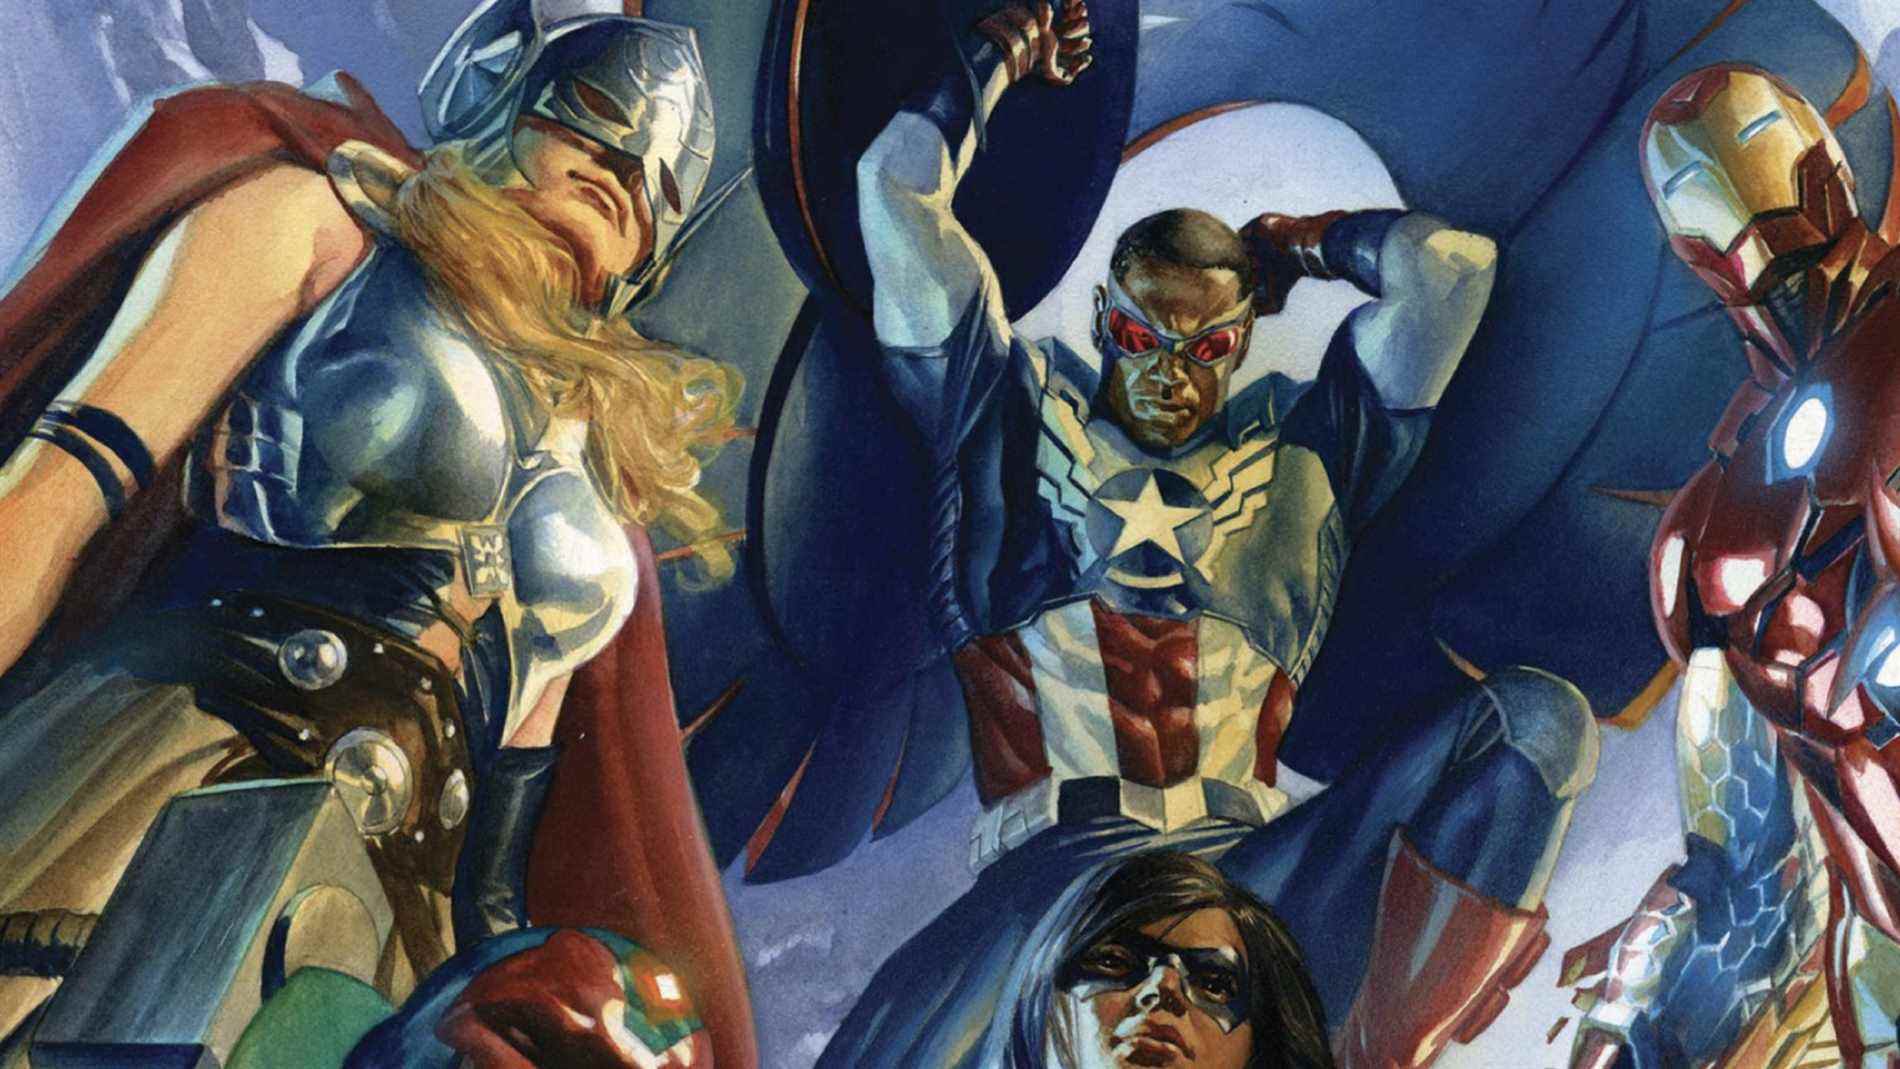 All-New All-Different Avengers #1 extrait de couverture